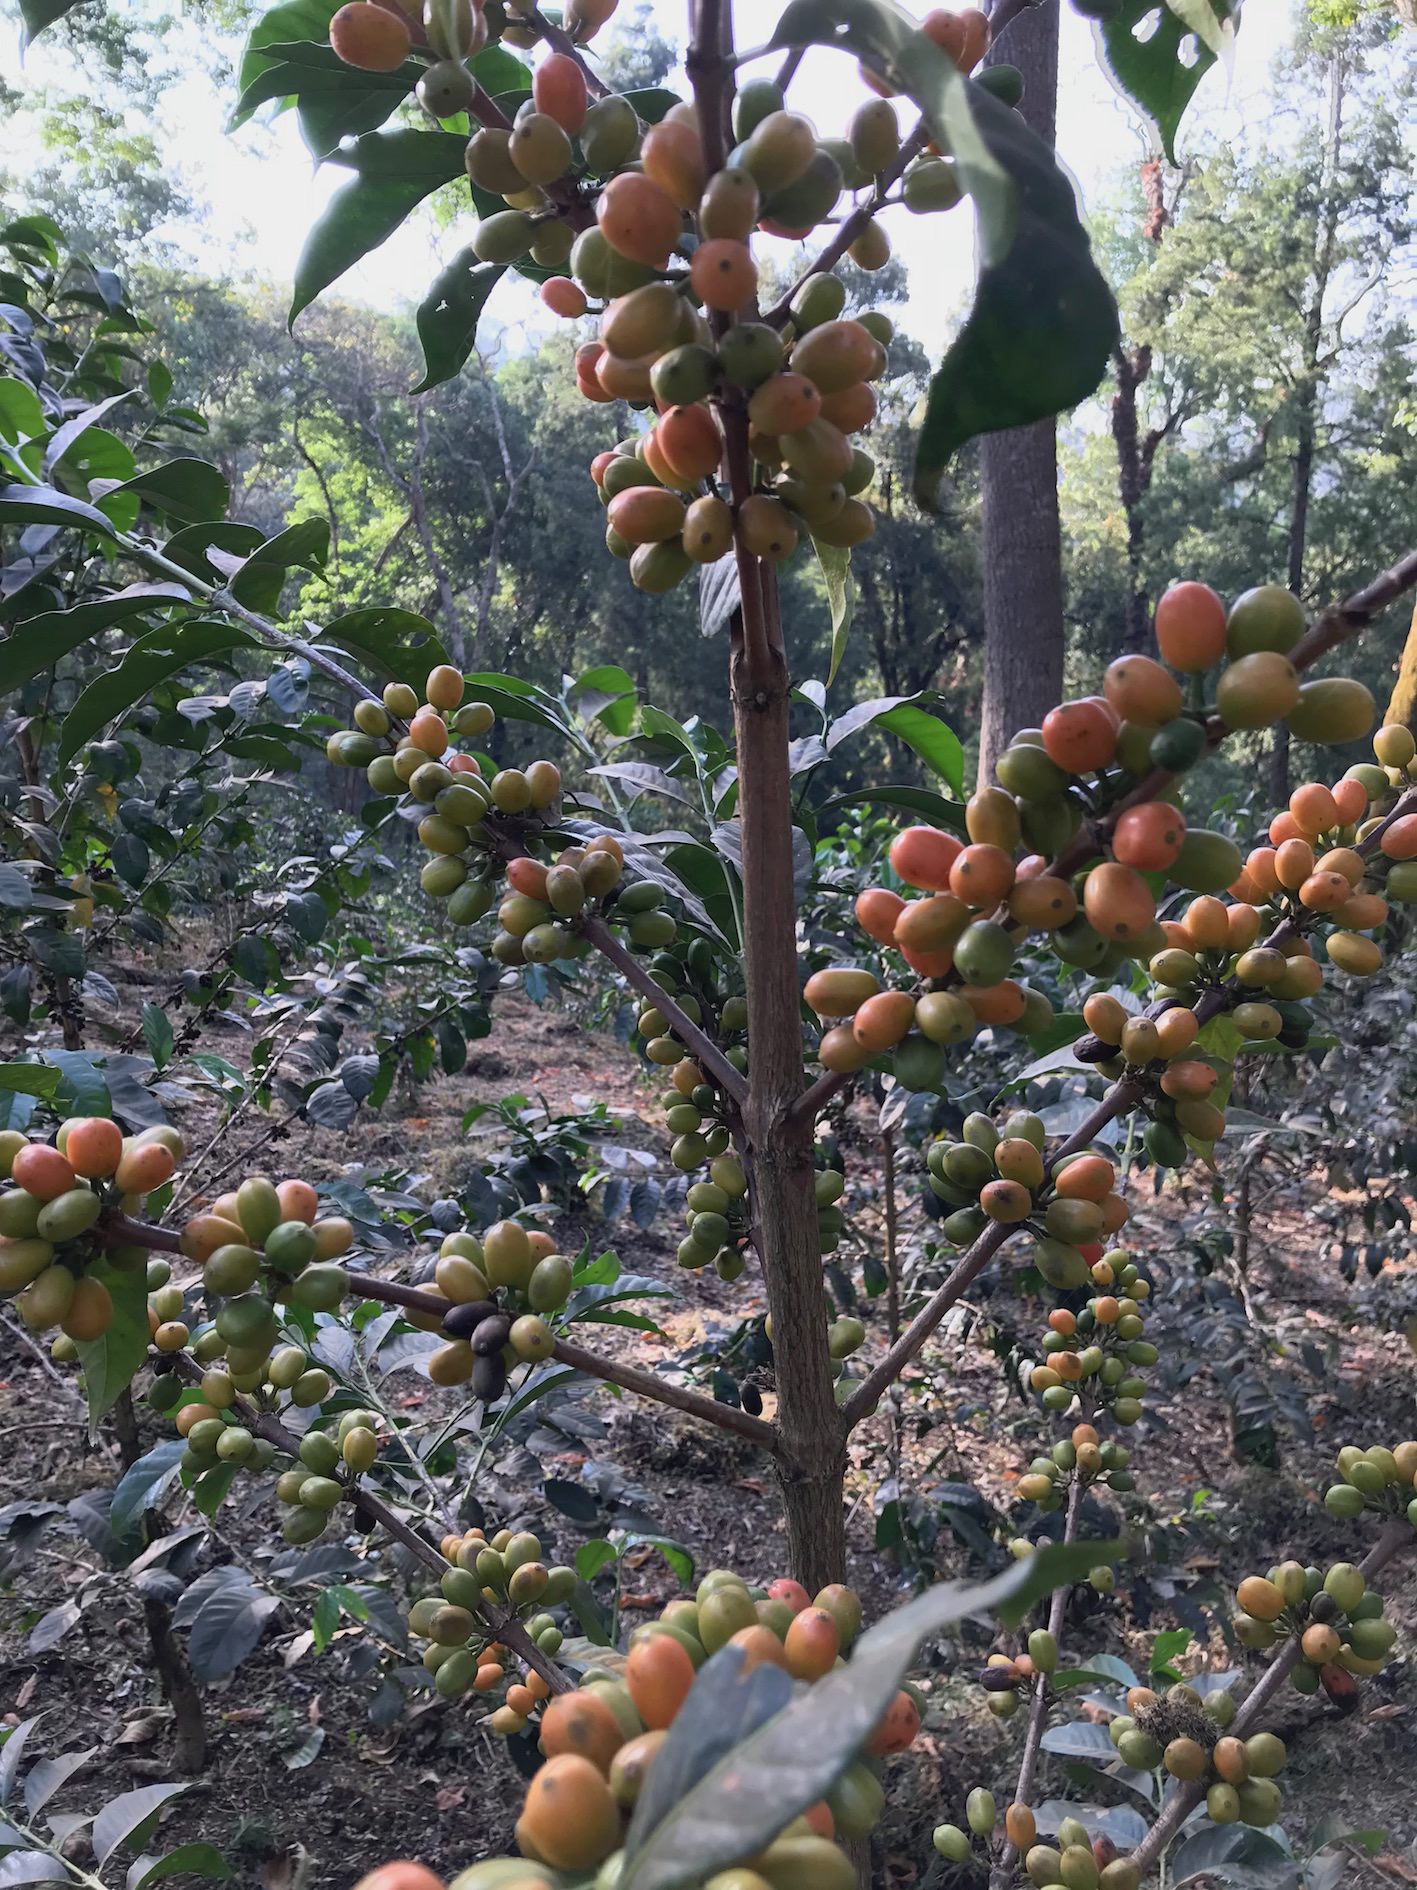  The biodiversity of coffee in Ethiopia is astounding 